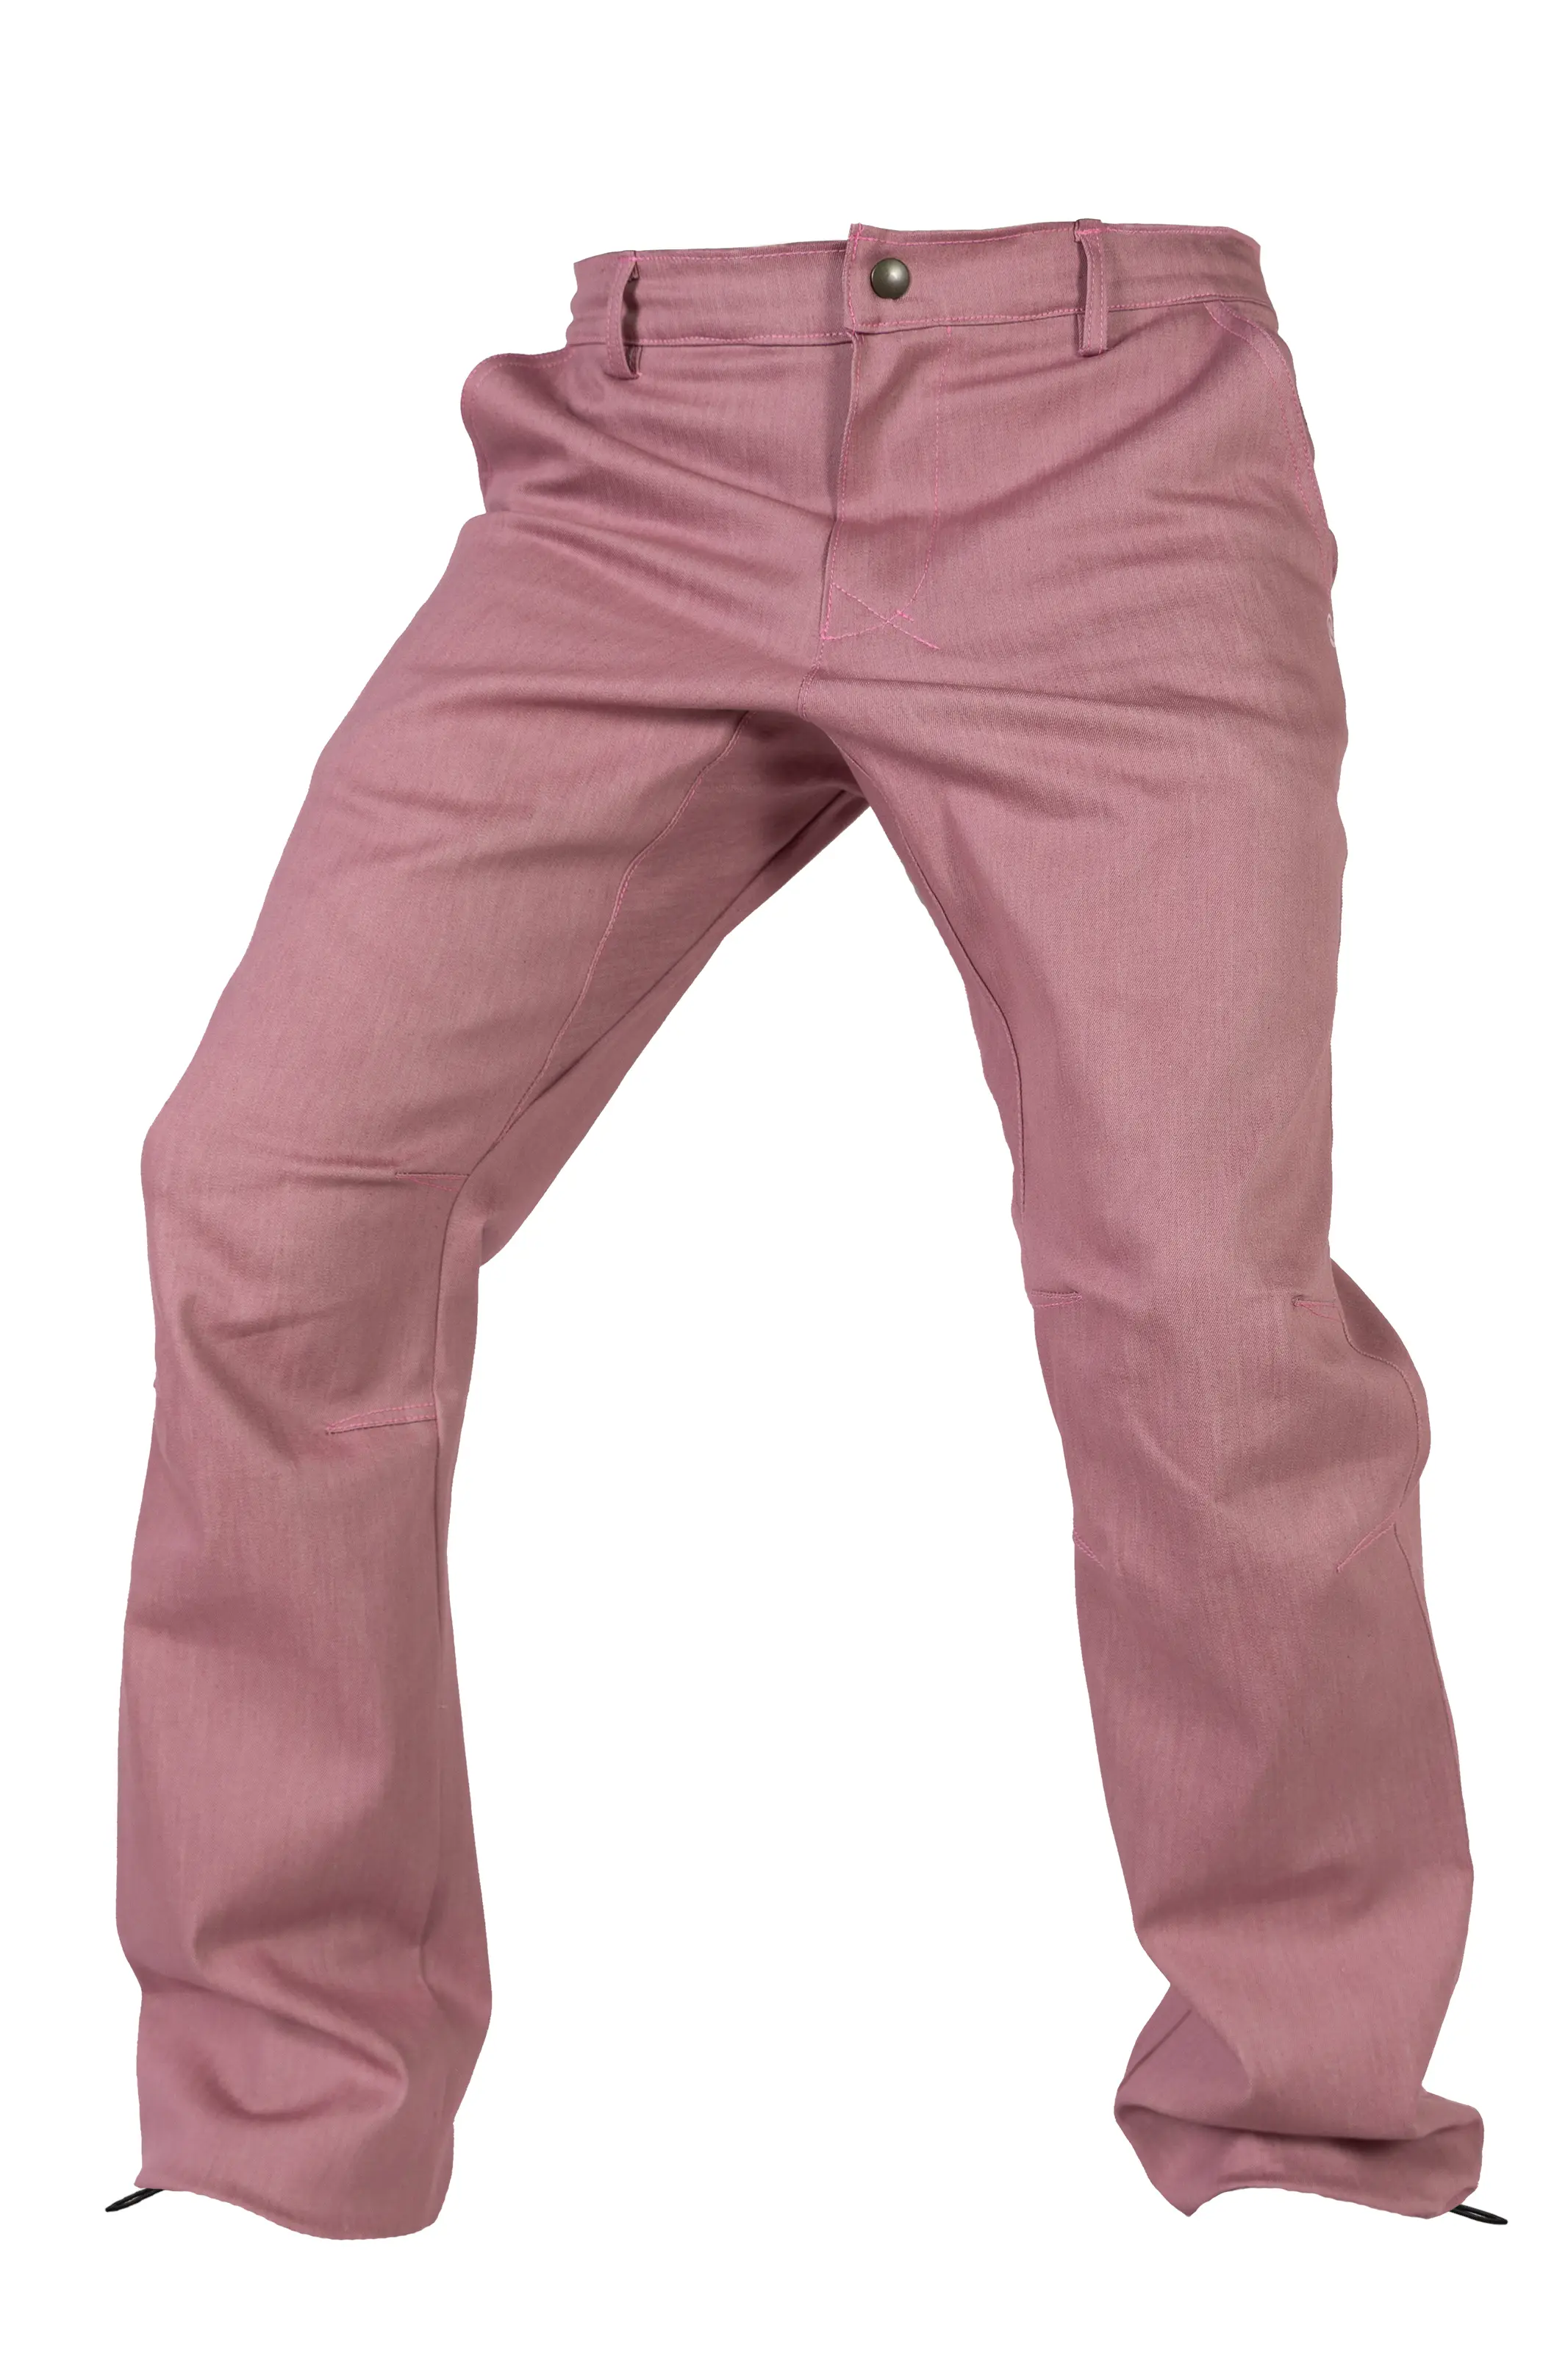 Men's jeans in soft light pink denim - BILLY 2 Monvic